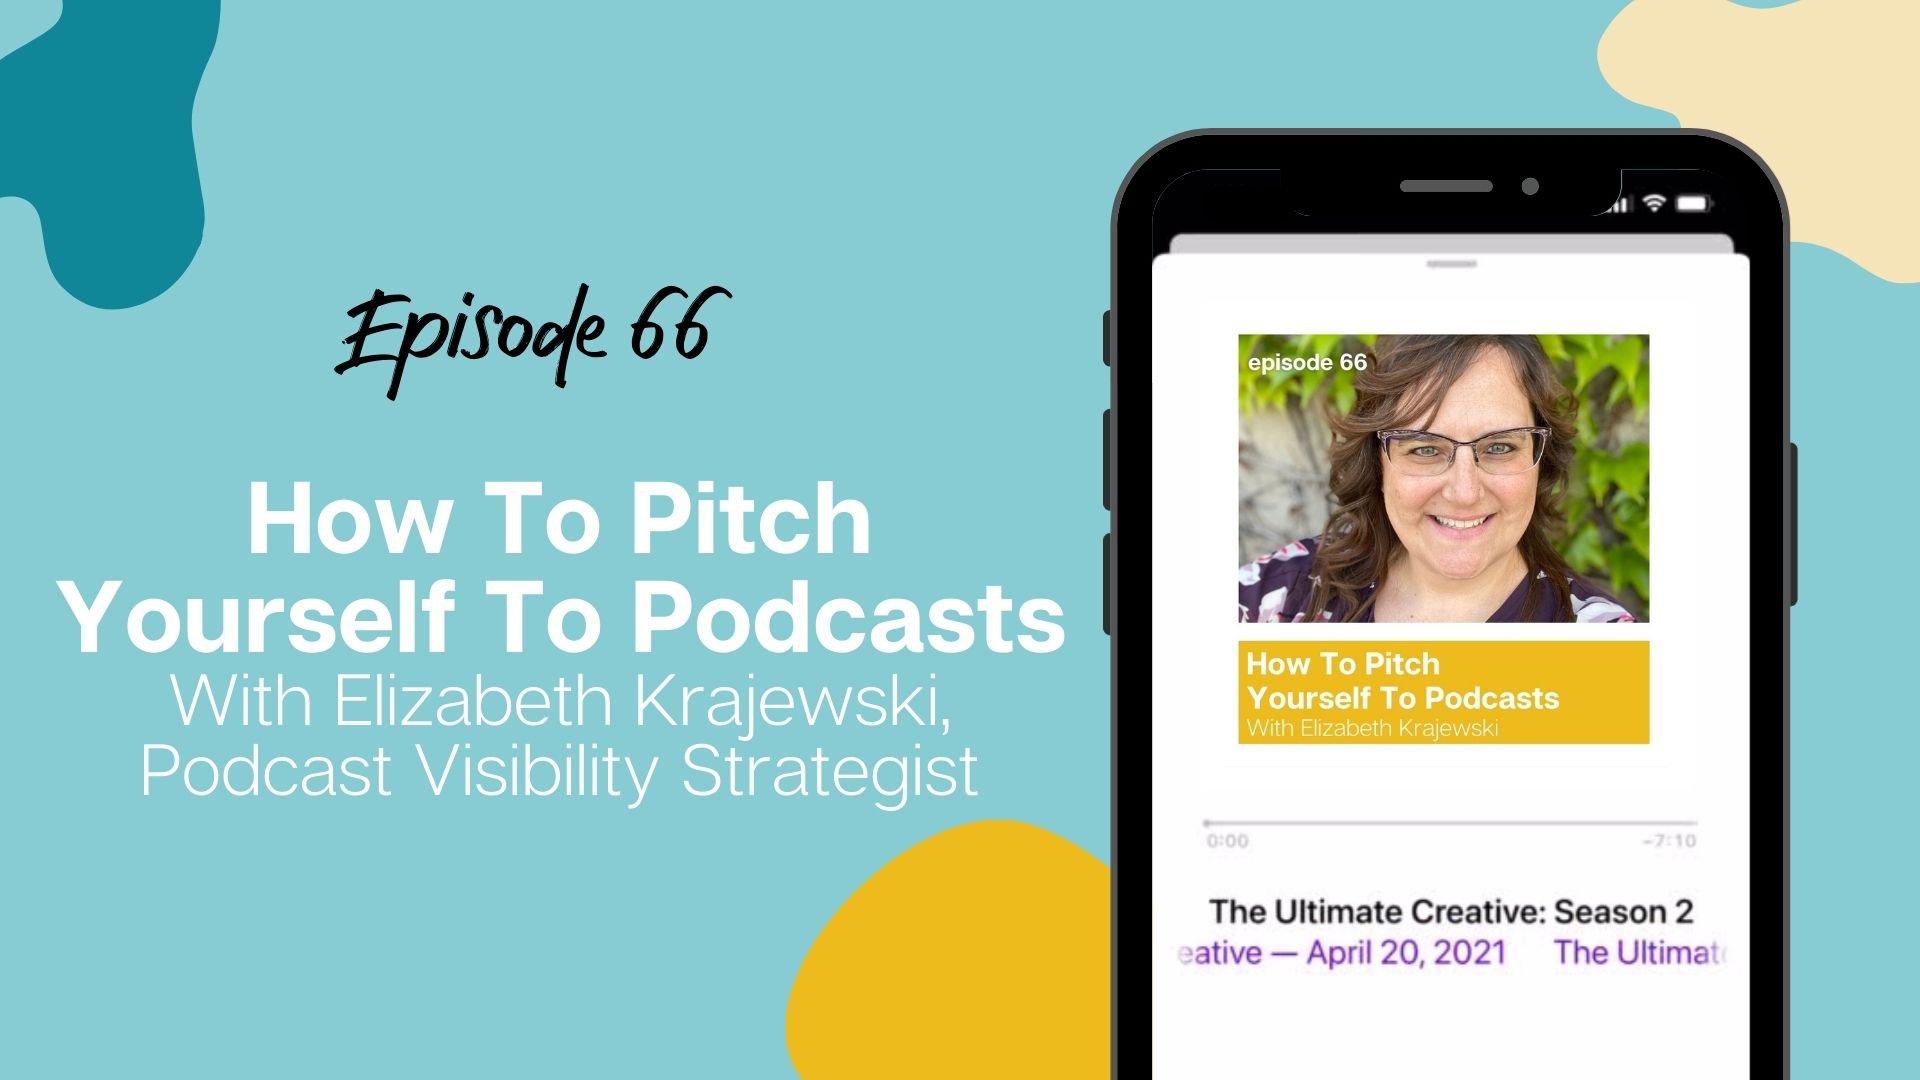 How To Pitch Yourself To Podcasts with Elizabeth Krajewski Podcast Visibility Strategist